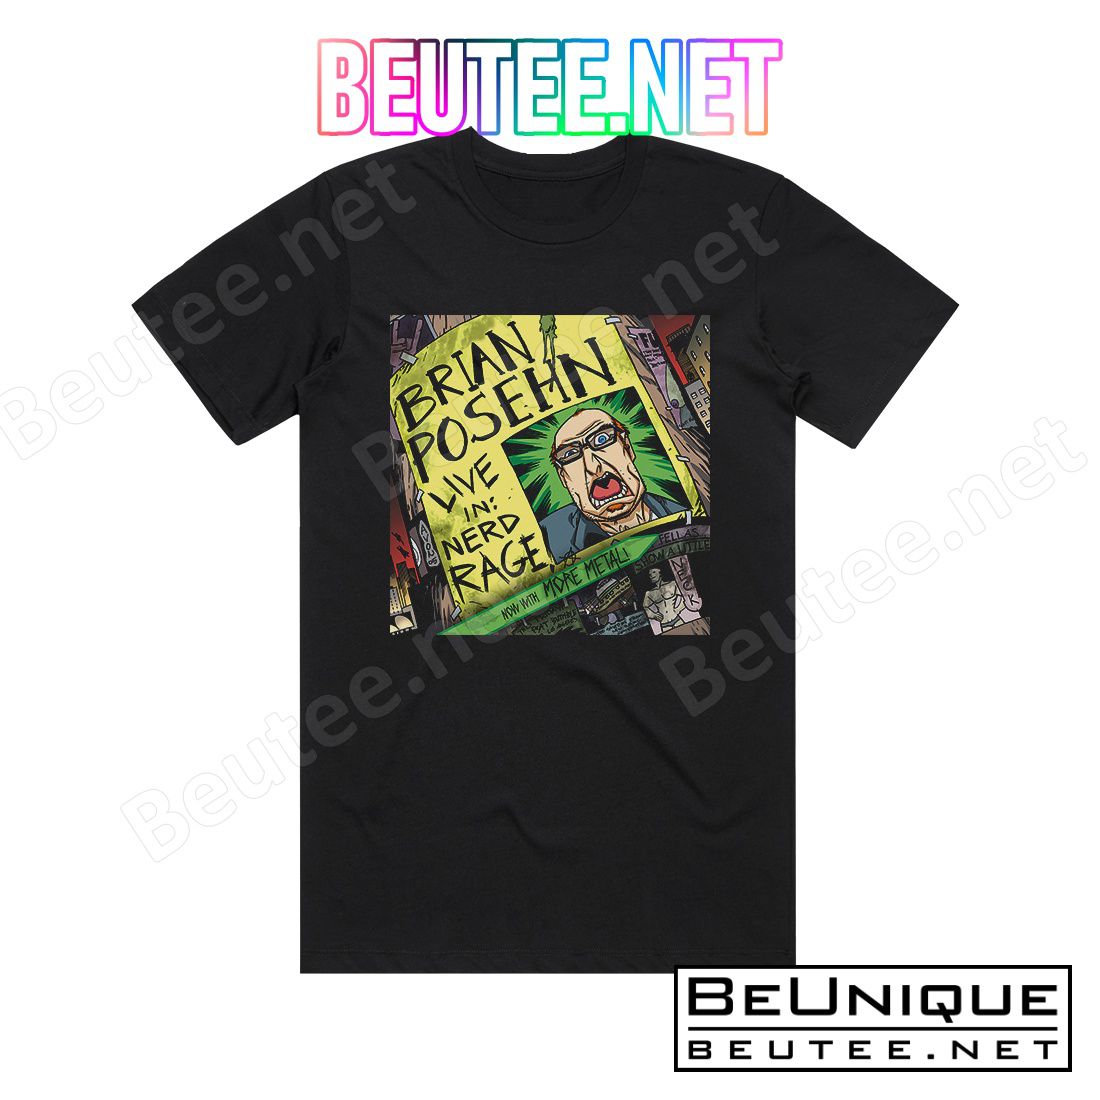 Brian Posehn Live In Nerd Rage Album Cover T-Shirt